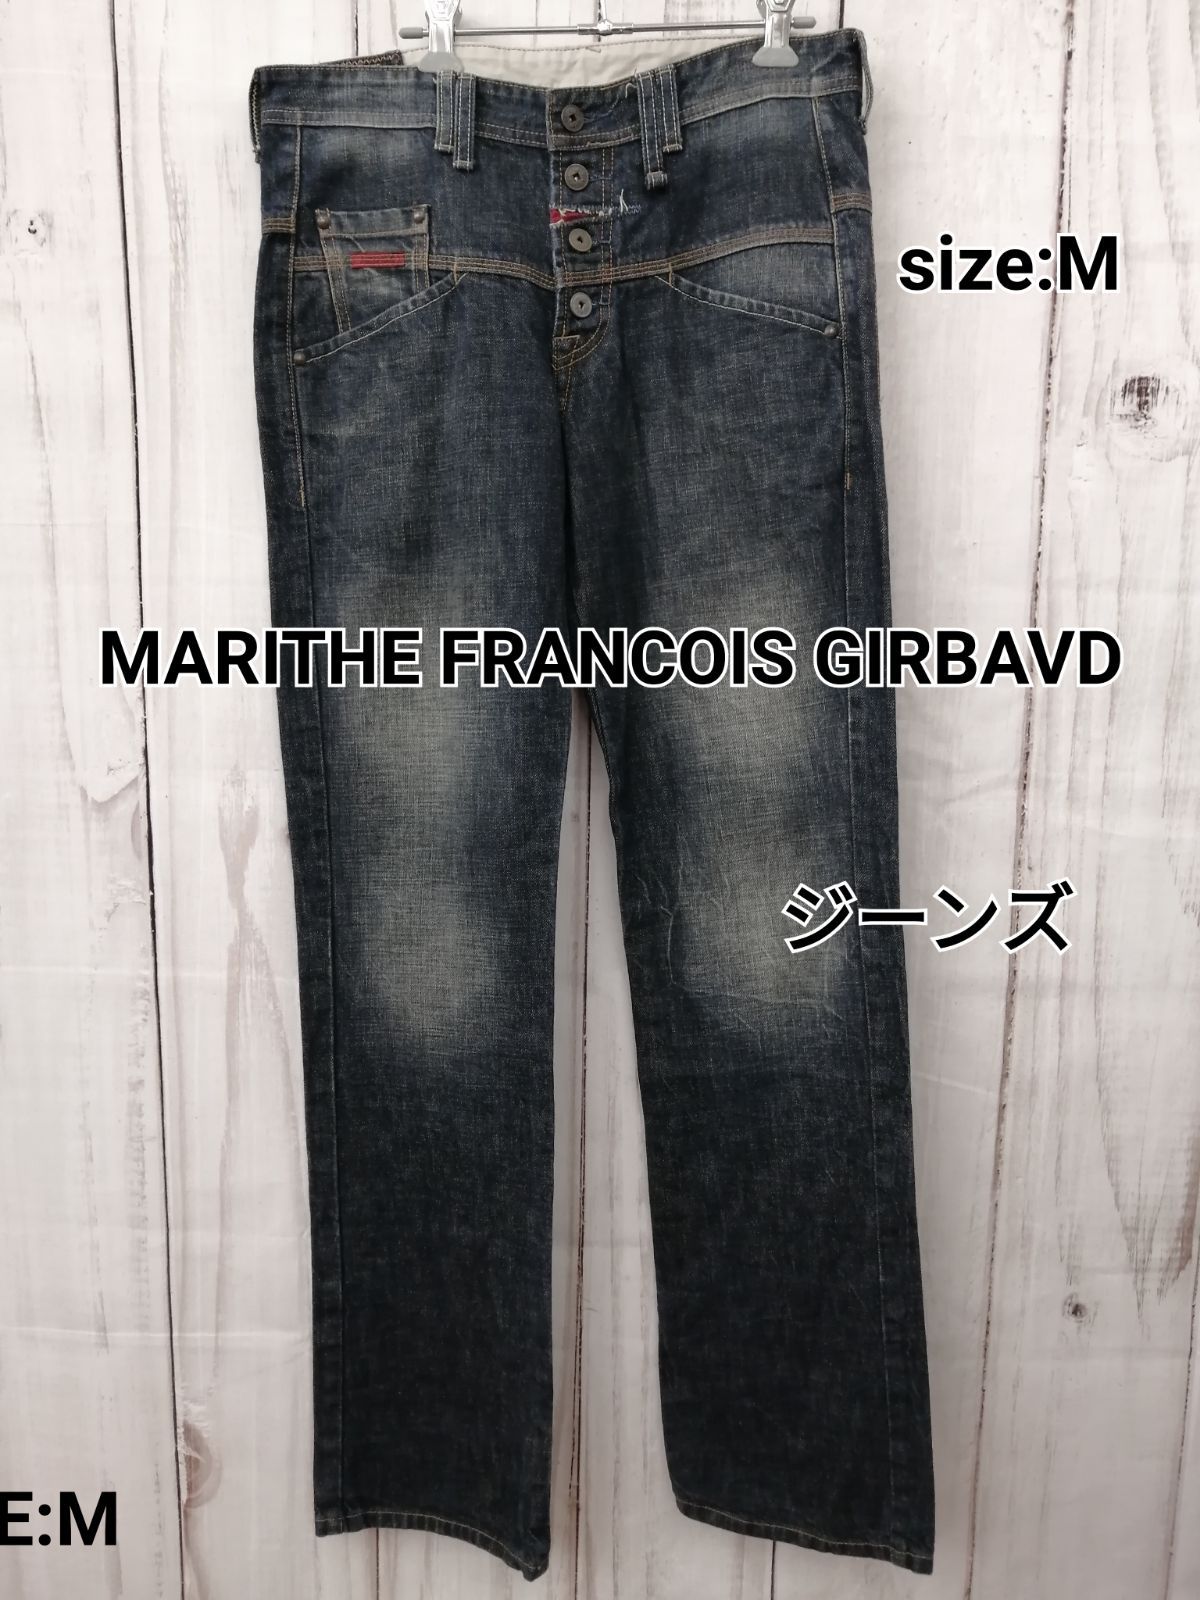 mxxshopMarithe Francois Girbaud jeans sizeM